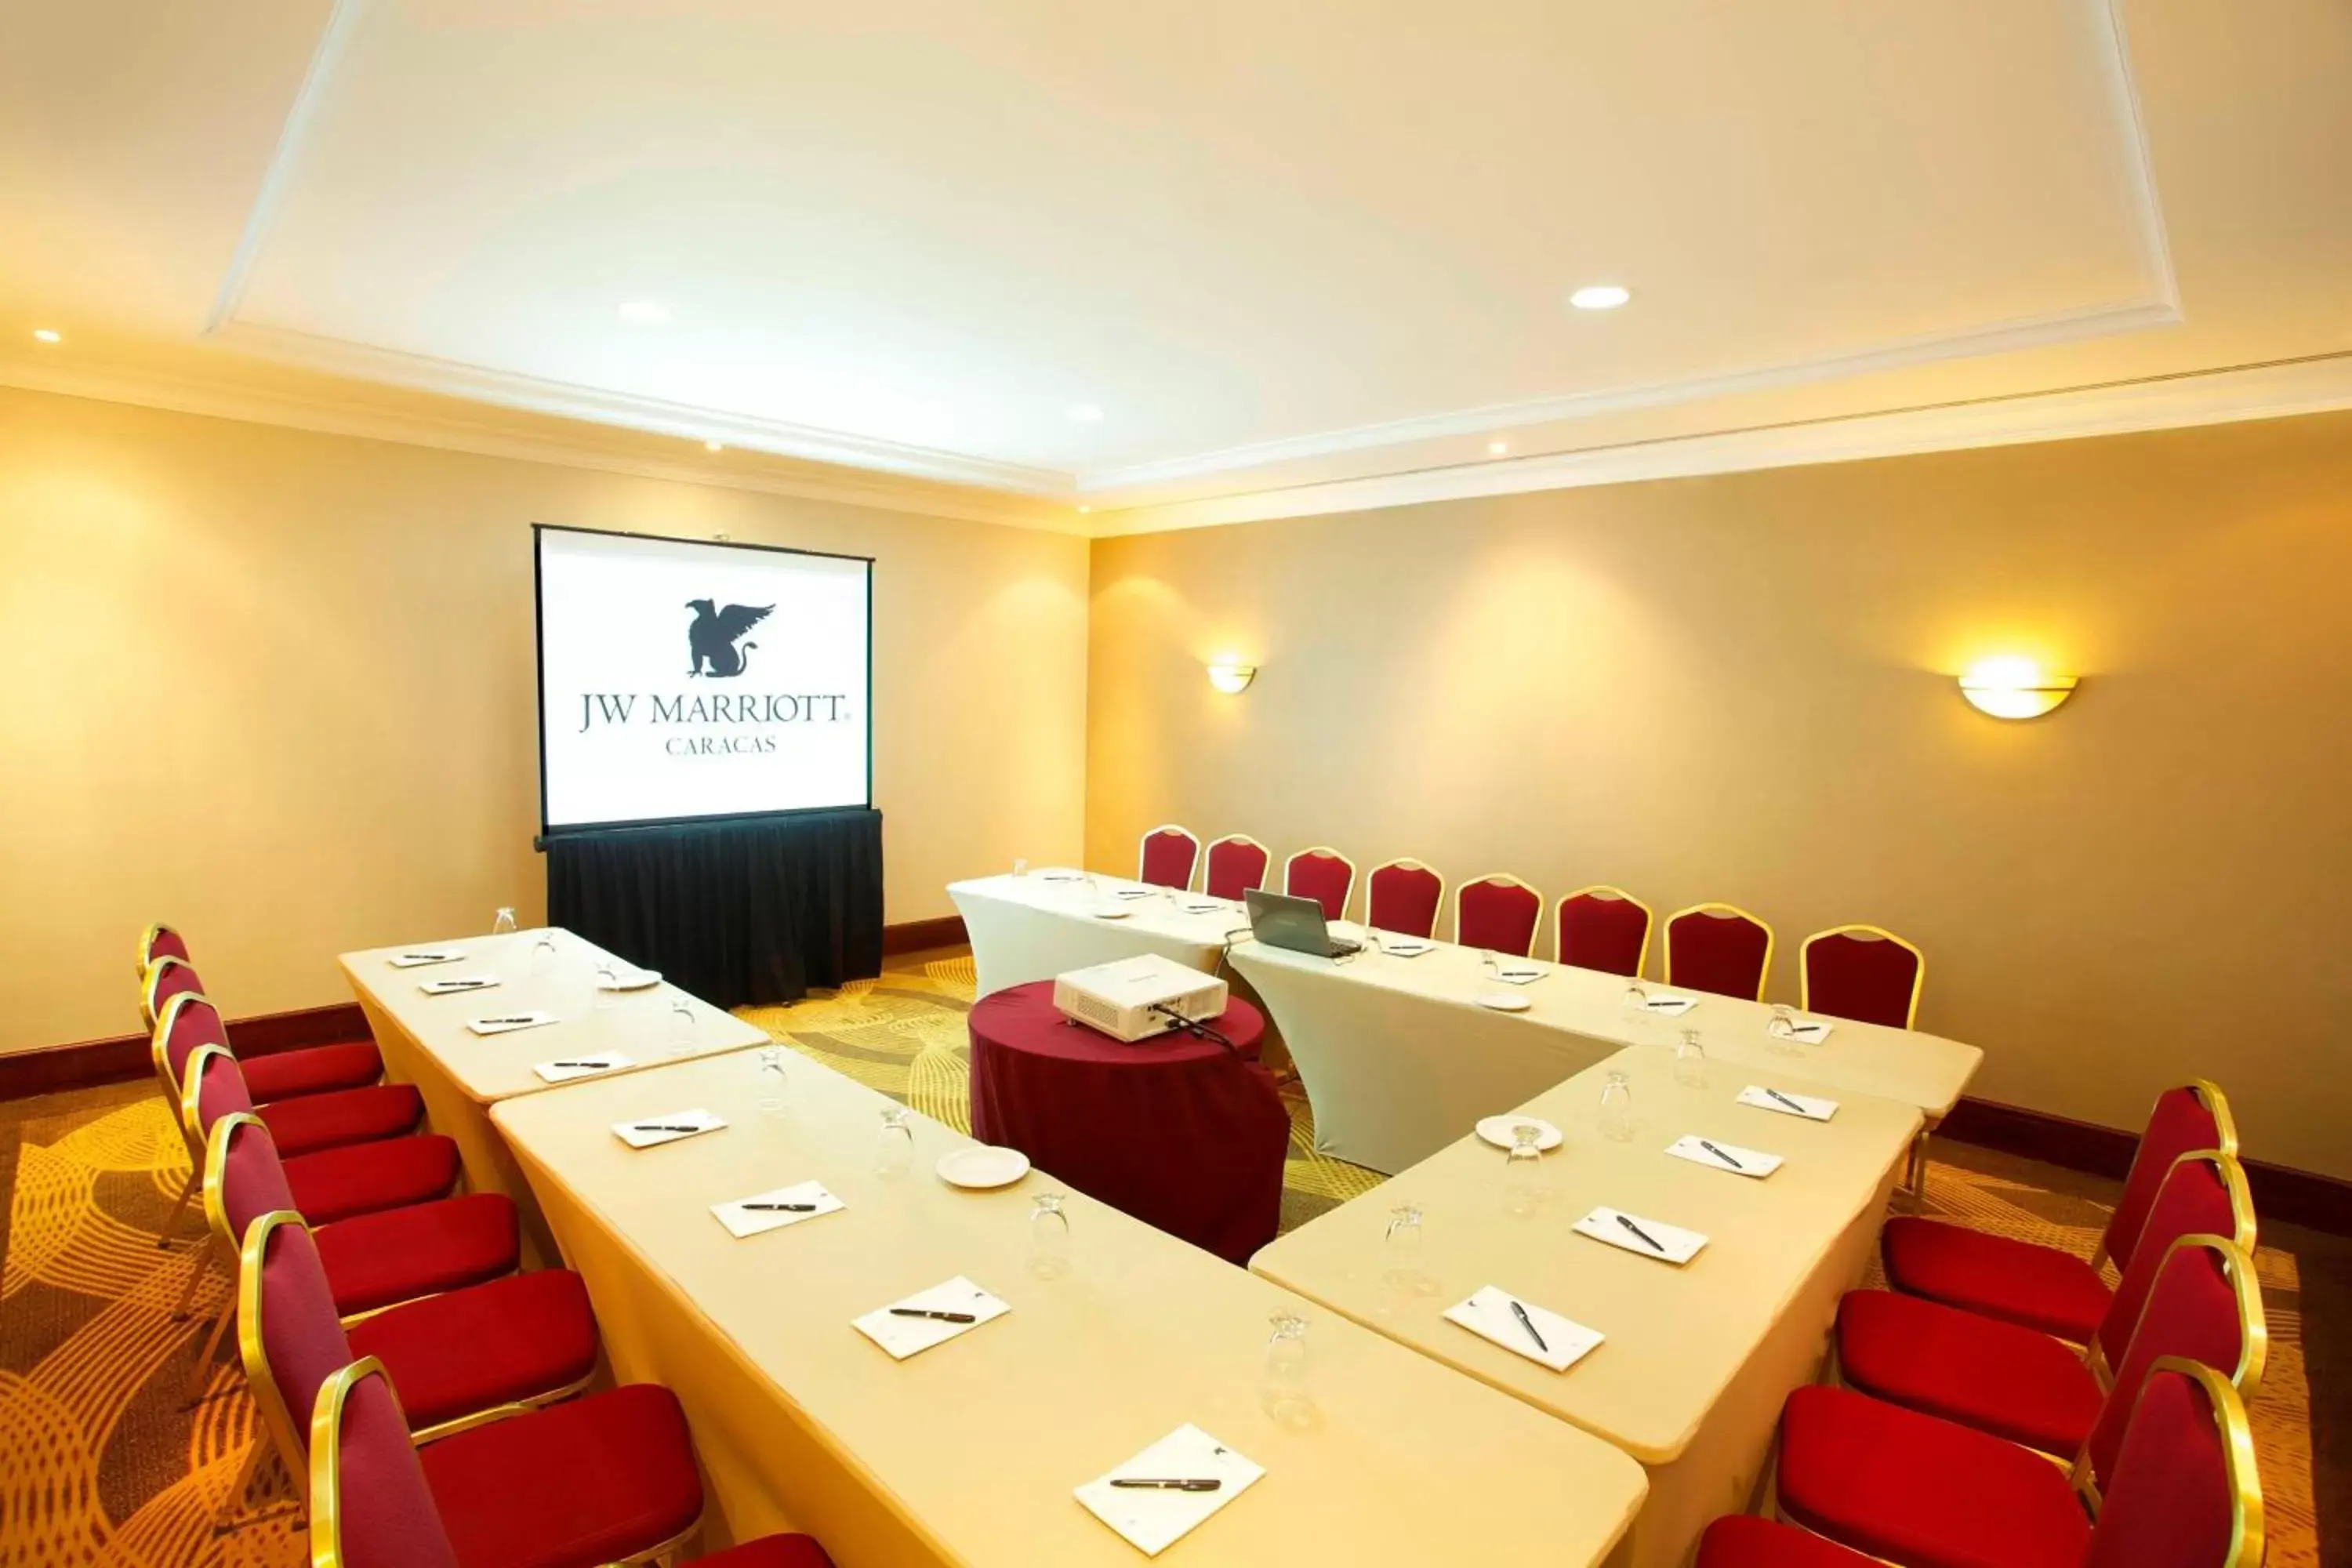 Meeting/conference room in JW Marriott Caracas